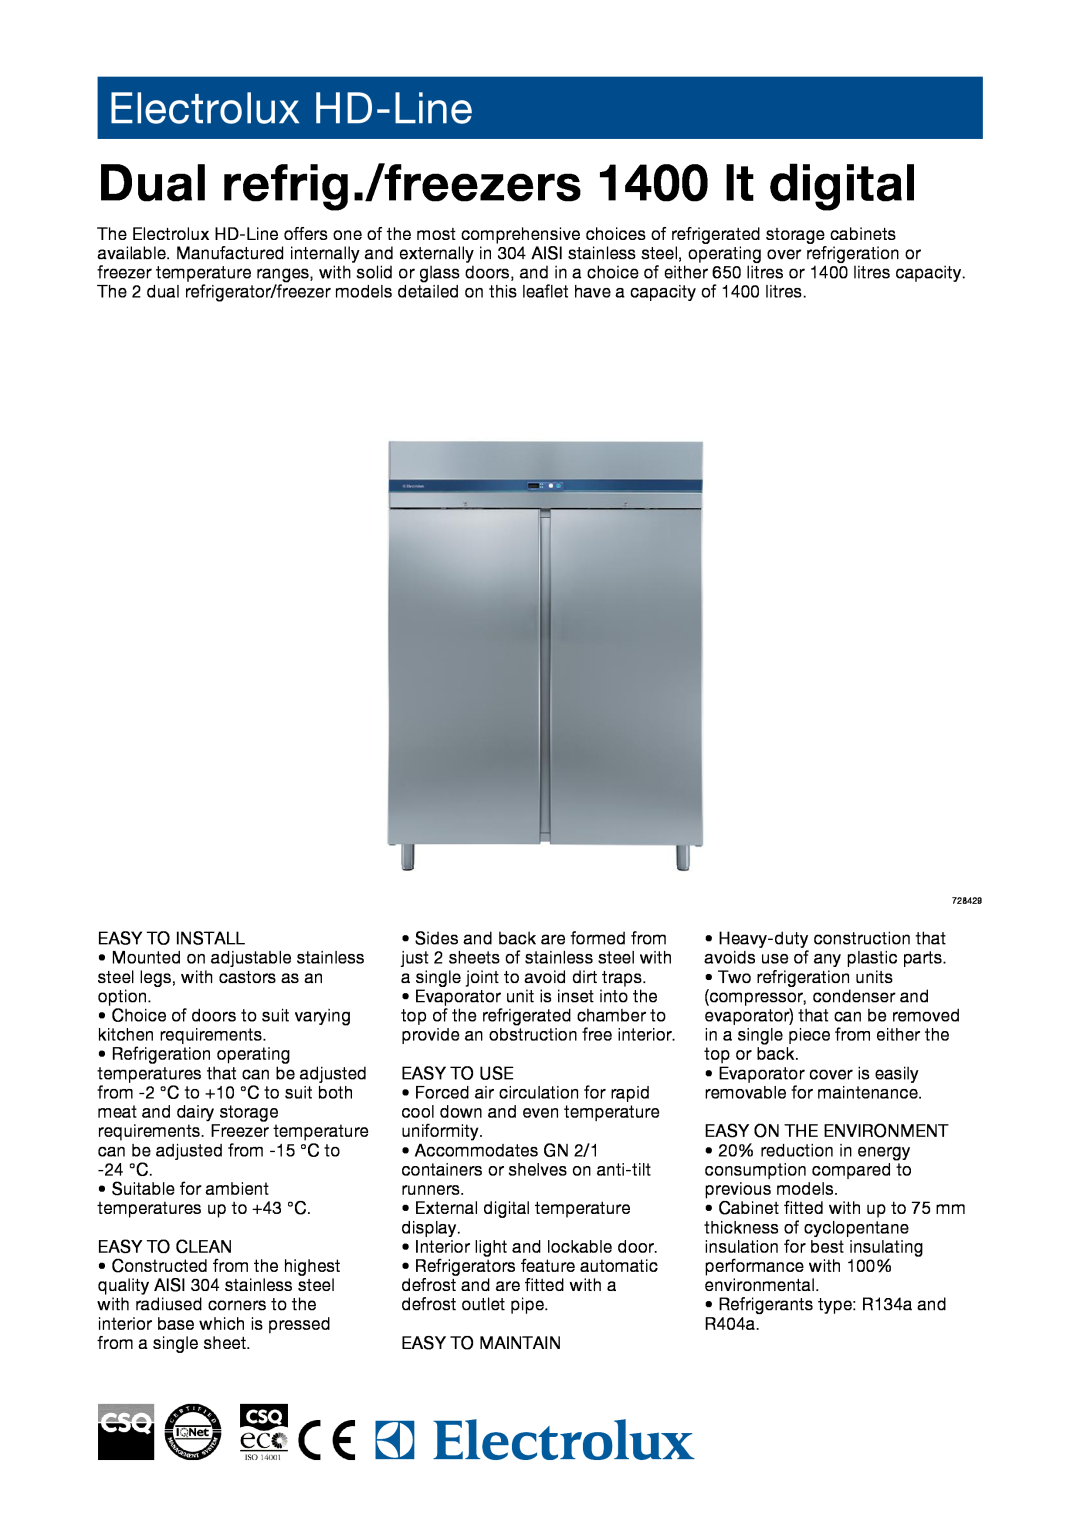 Electrolux RH14DFD2, 728429 manual Dual refrig./freezers 1400 lt digital, Electrolux HD-Line 